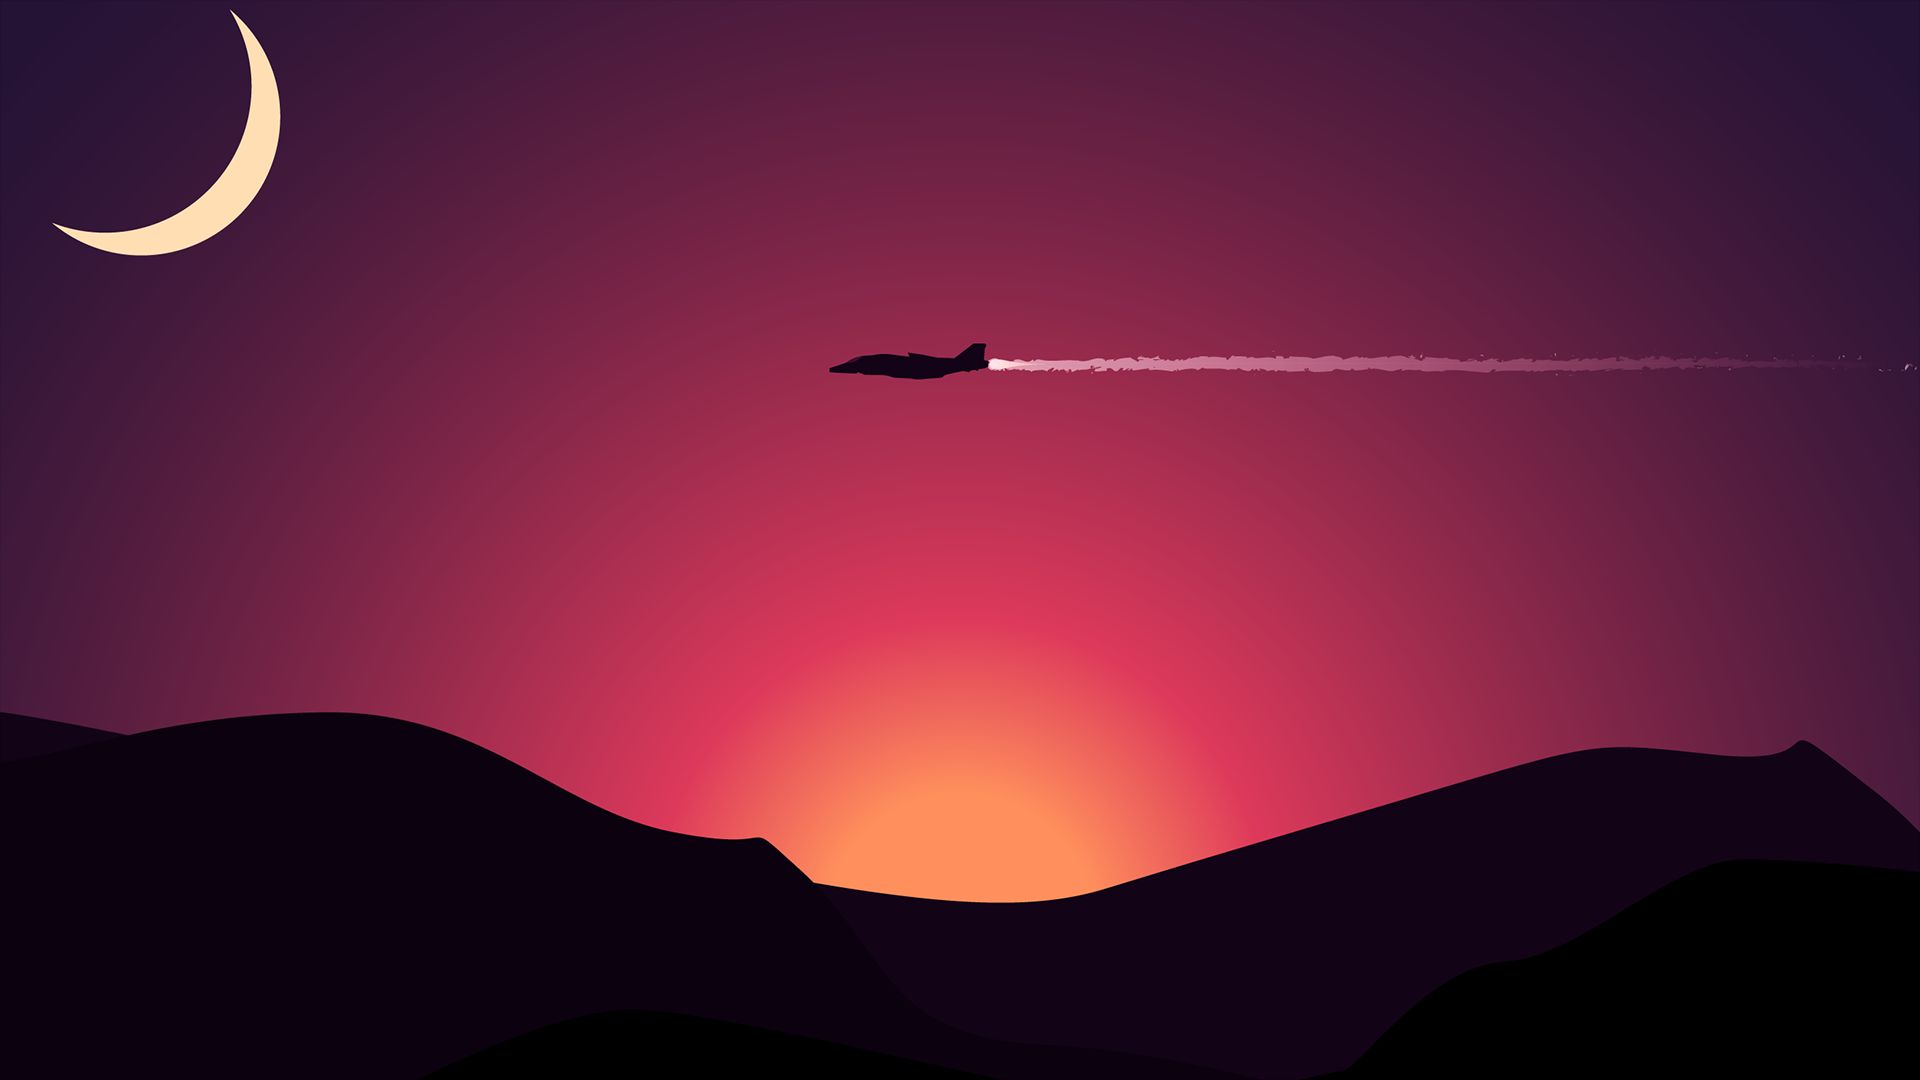 military, artistic, airplane, crescent, minimalist, sunset Free Stock Photo